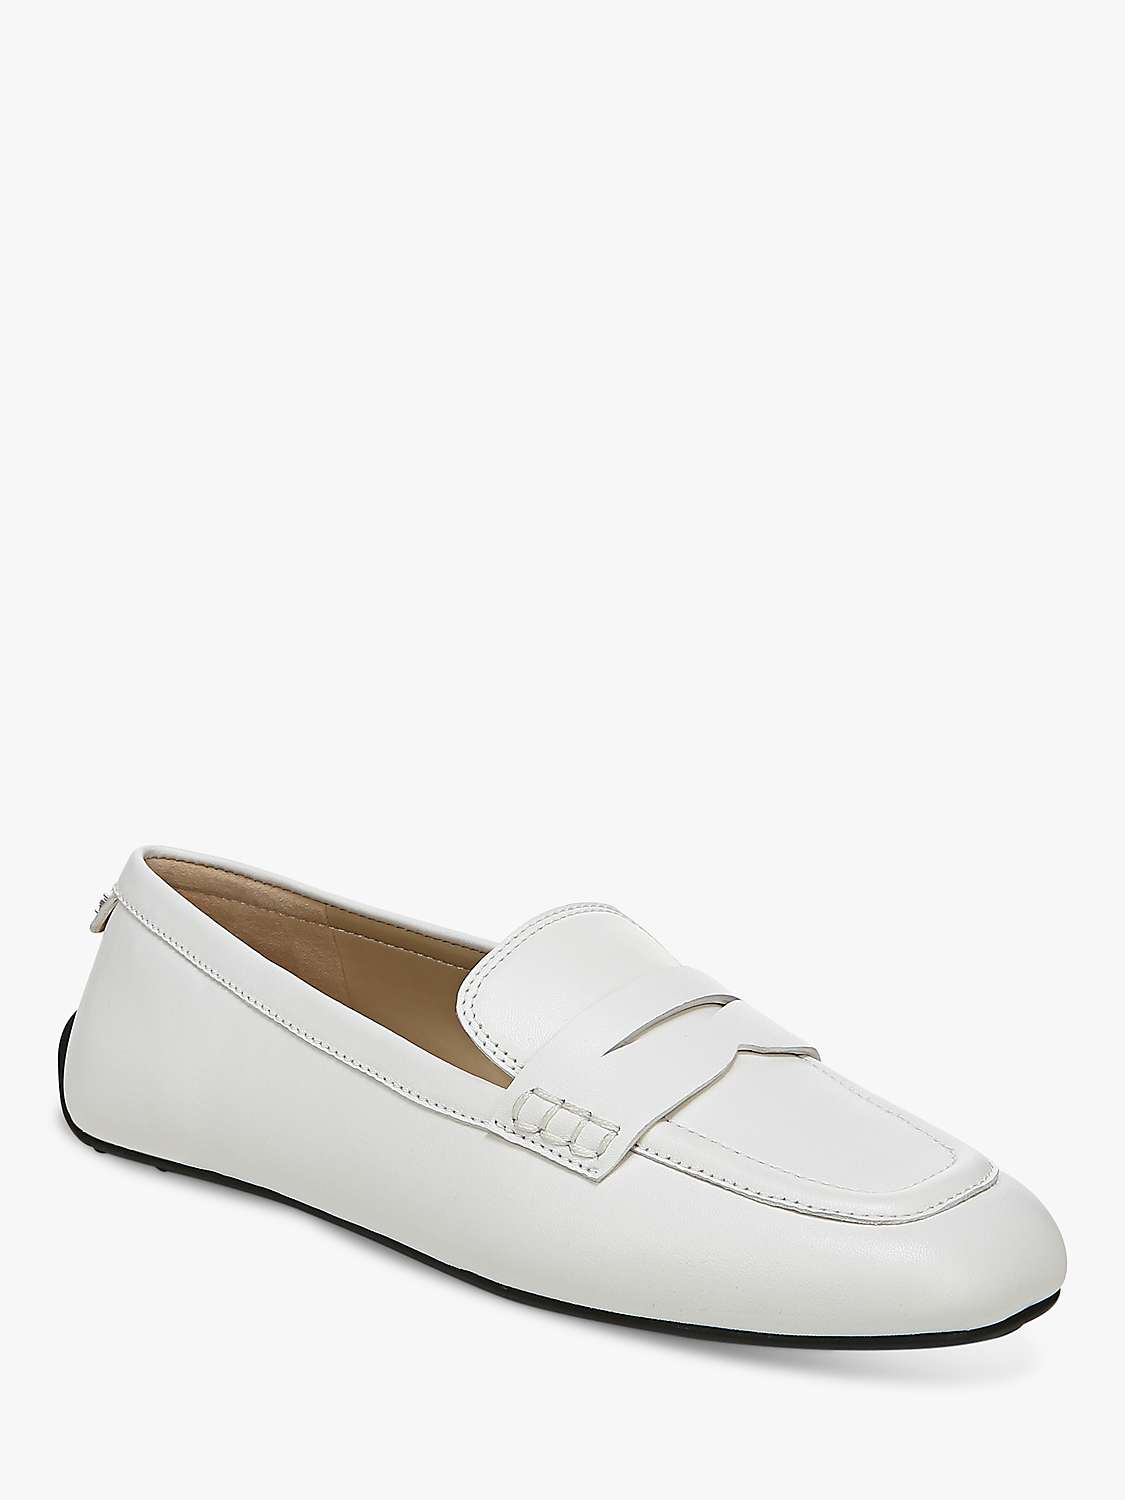 Sam Edelman Tucker Penny Loafer Flat Shoes, White at John Lewis & Partners